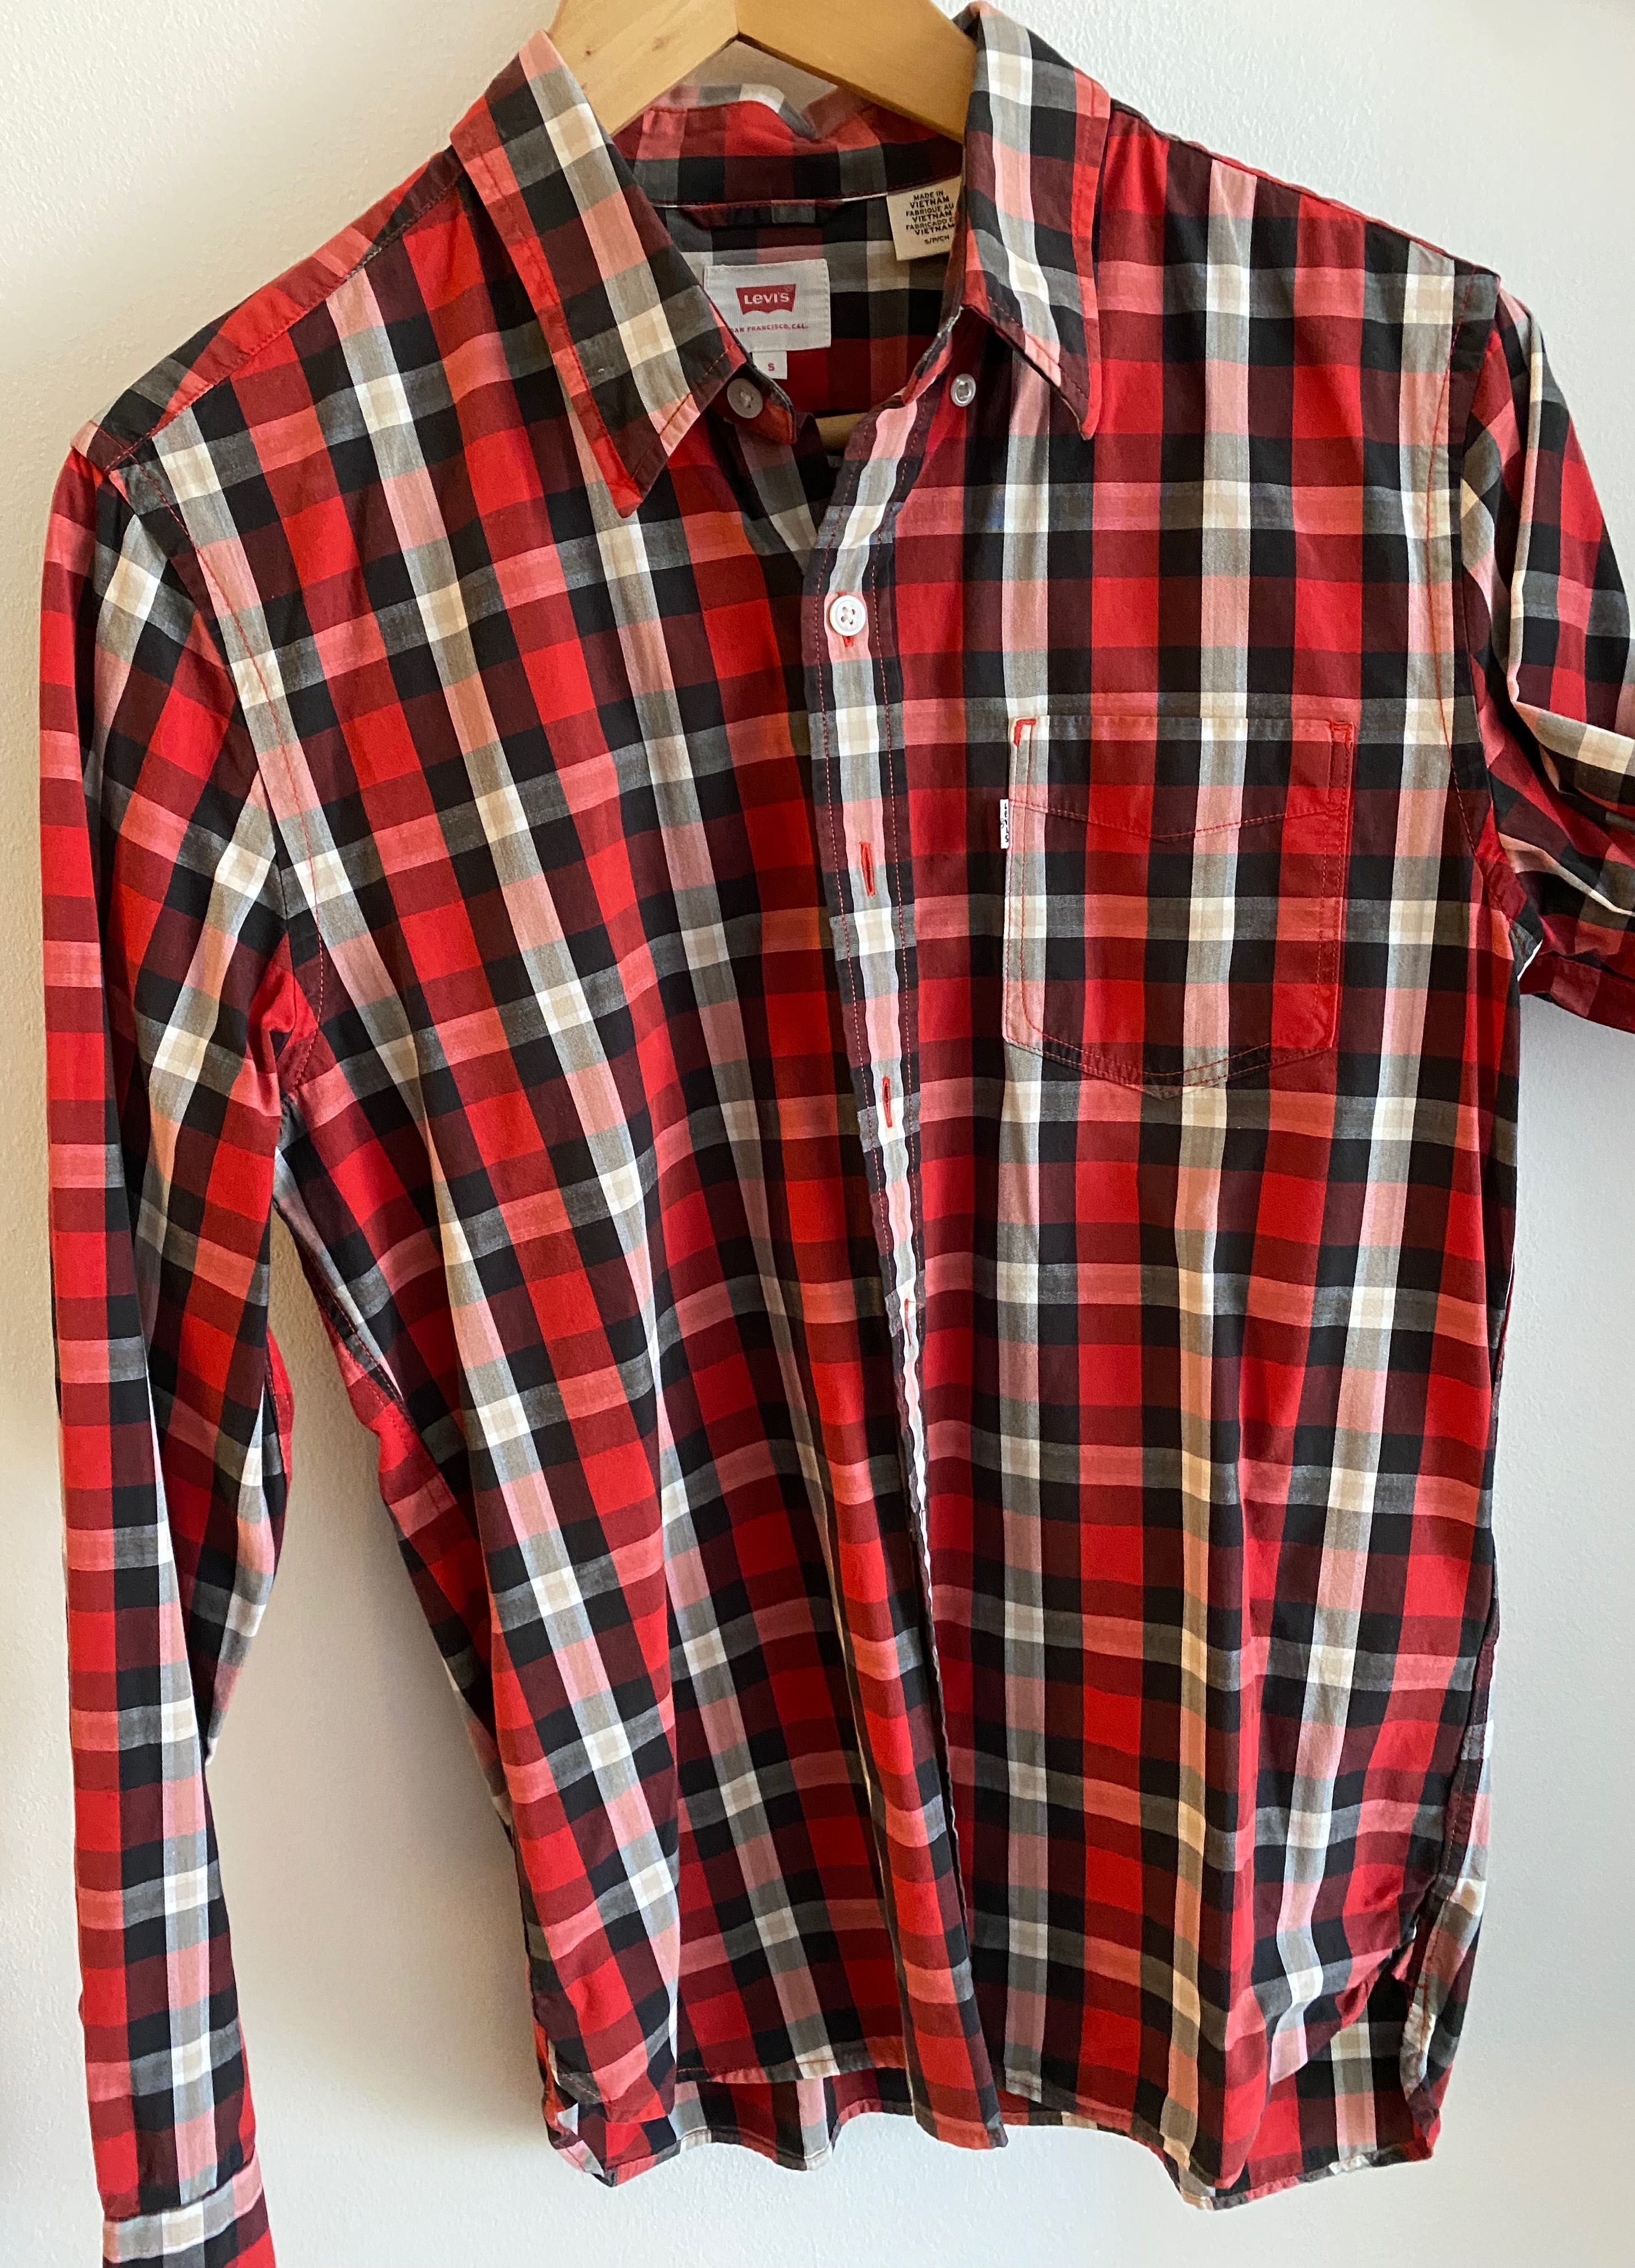 Camisa Levi's - xadrez vermelho/preto/branco